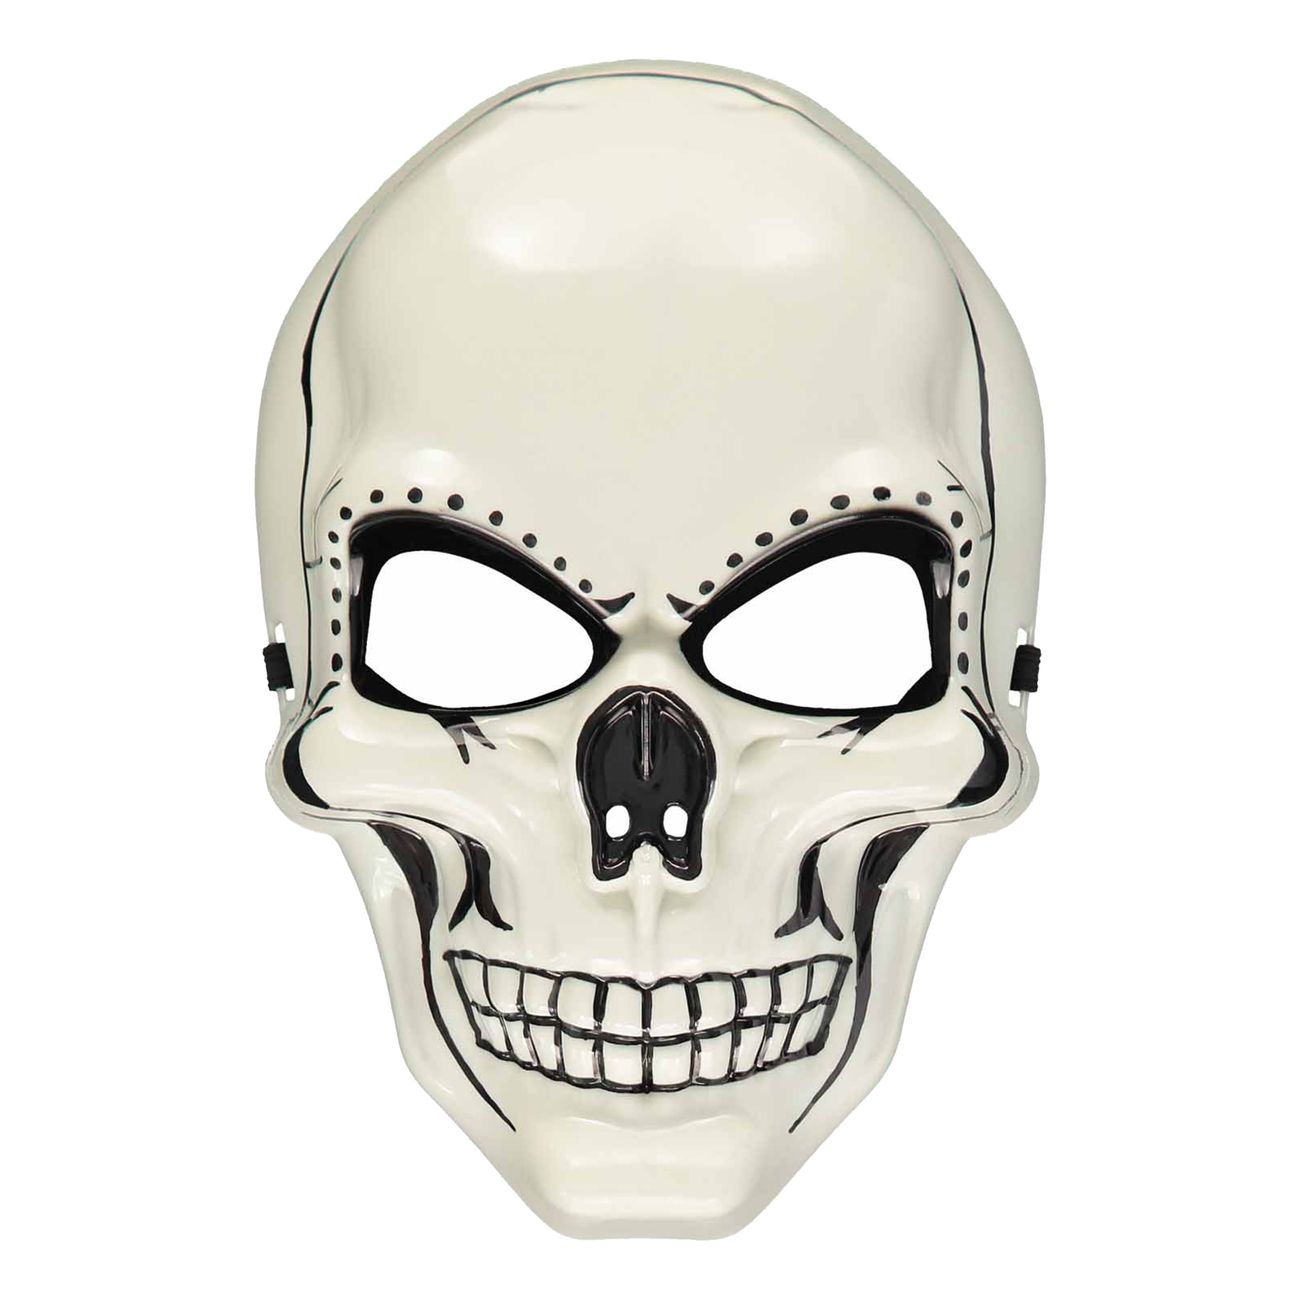 skeleton-mask-98022-1